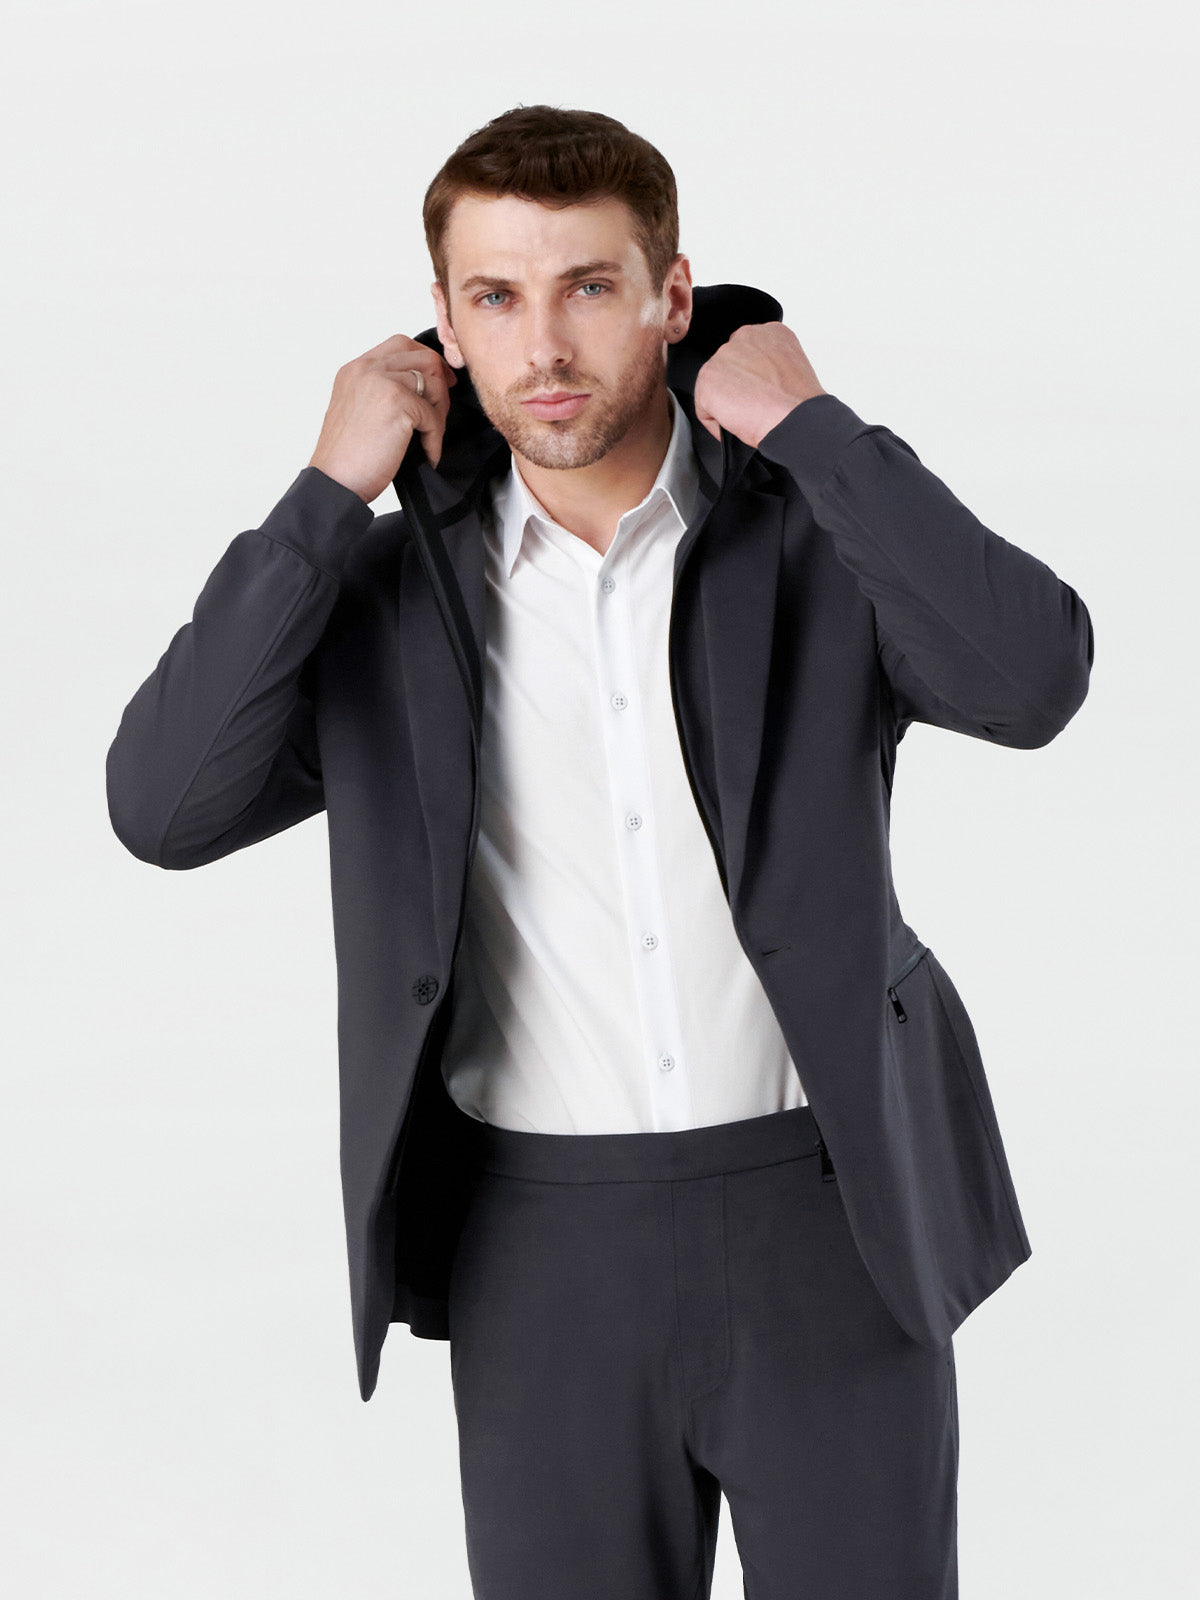 ill-Fitting Suit  Suit jacket, Suits, Jackets